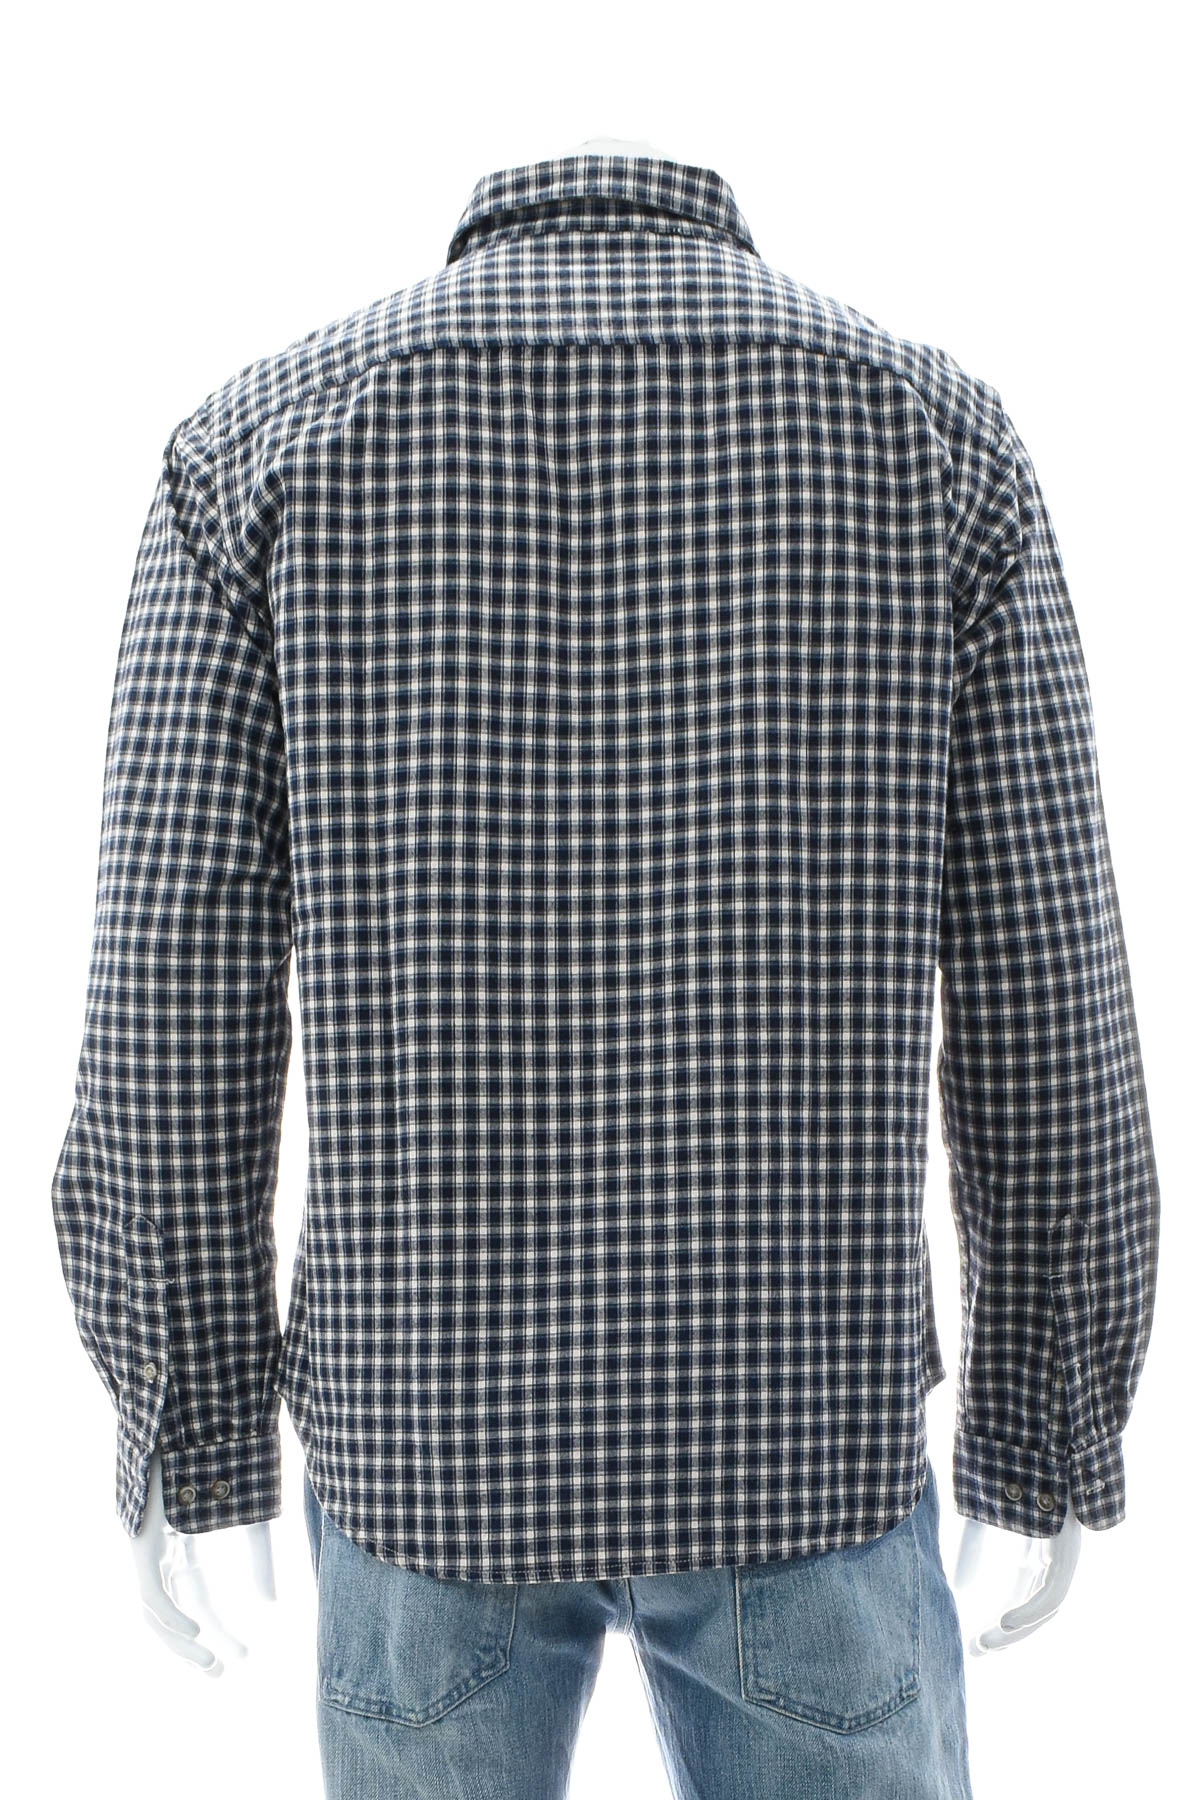 Men's shirt - GAP - 1